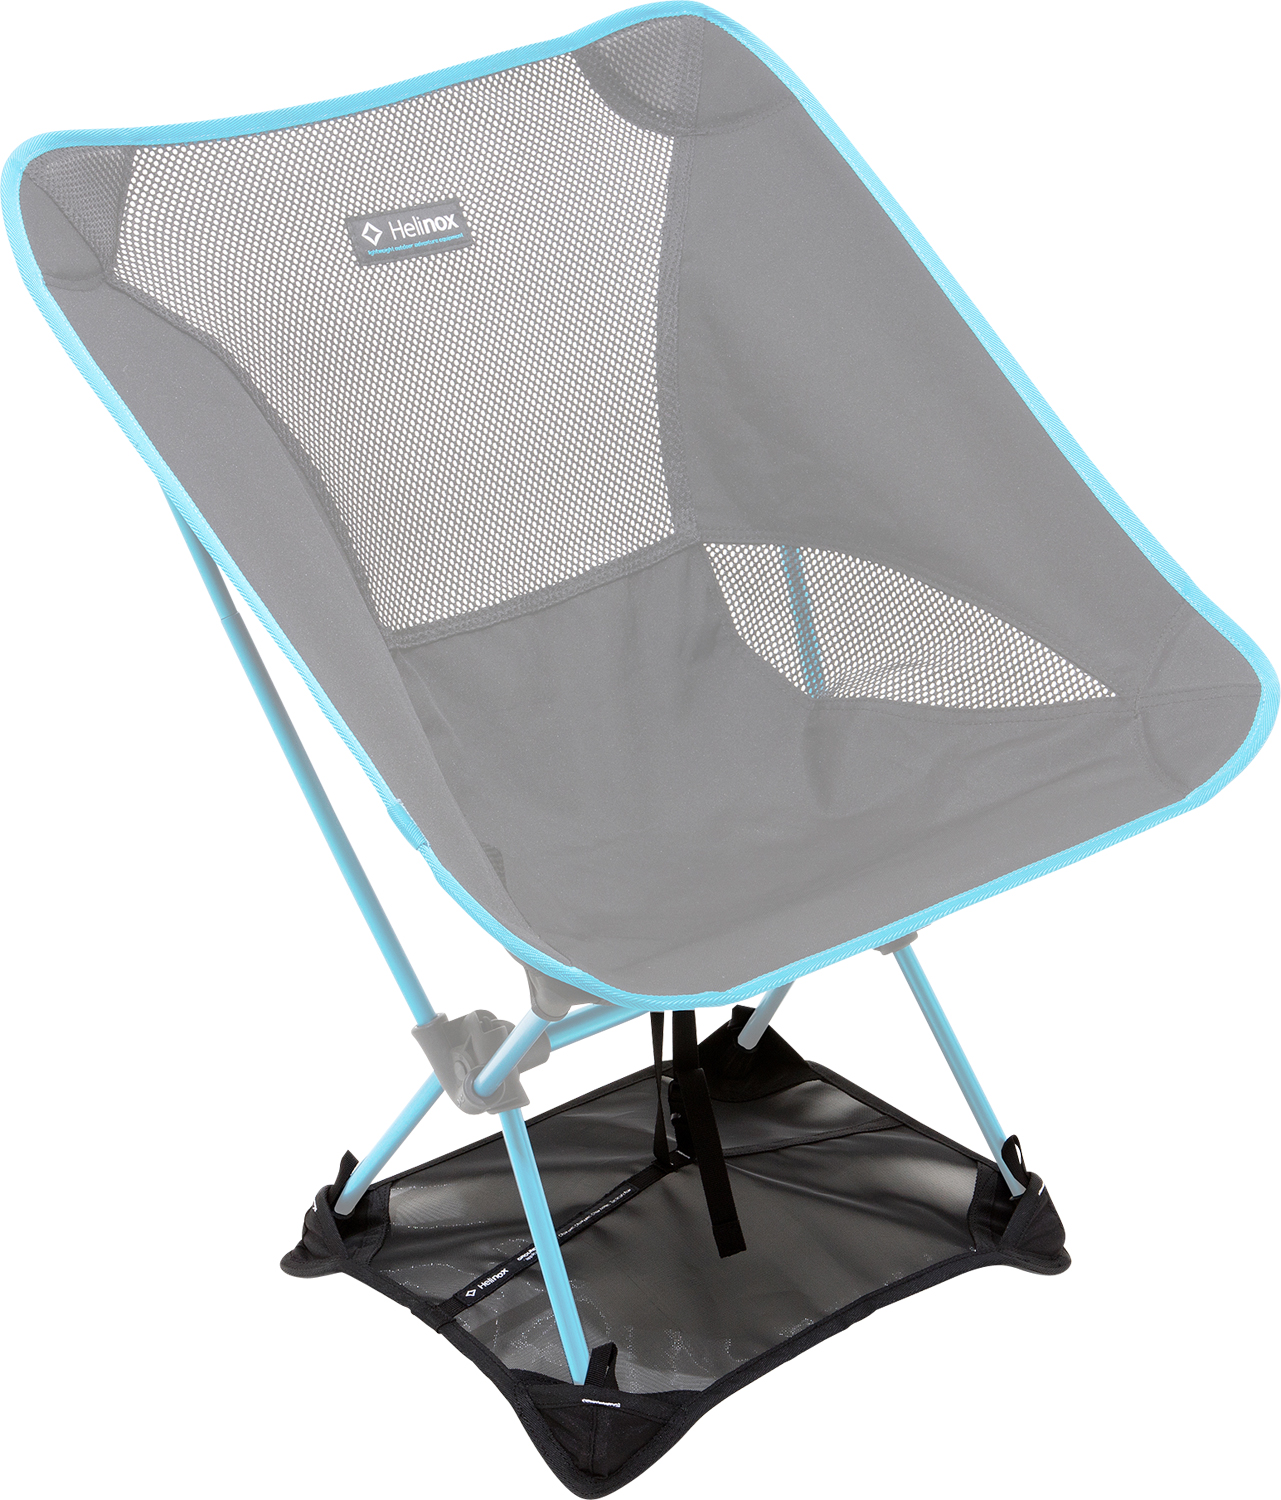 Helinox Bodenplane Chair One